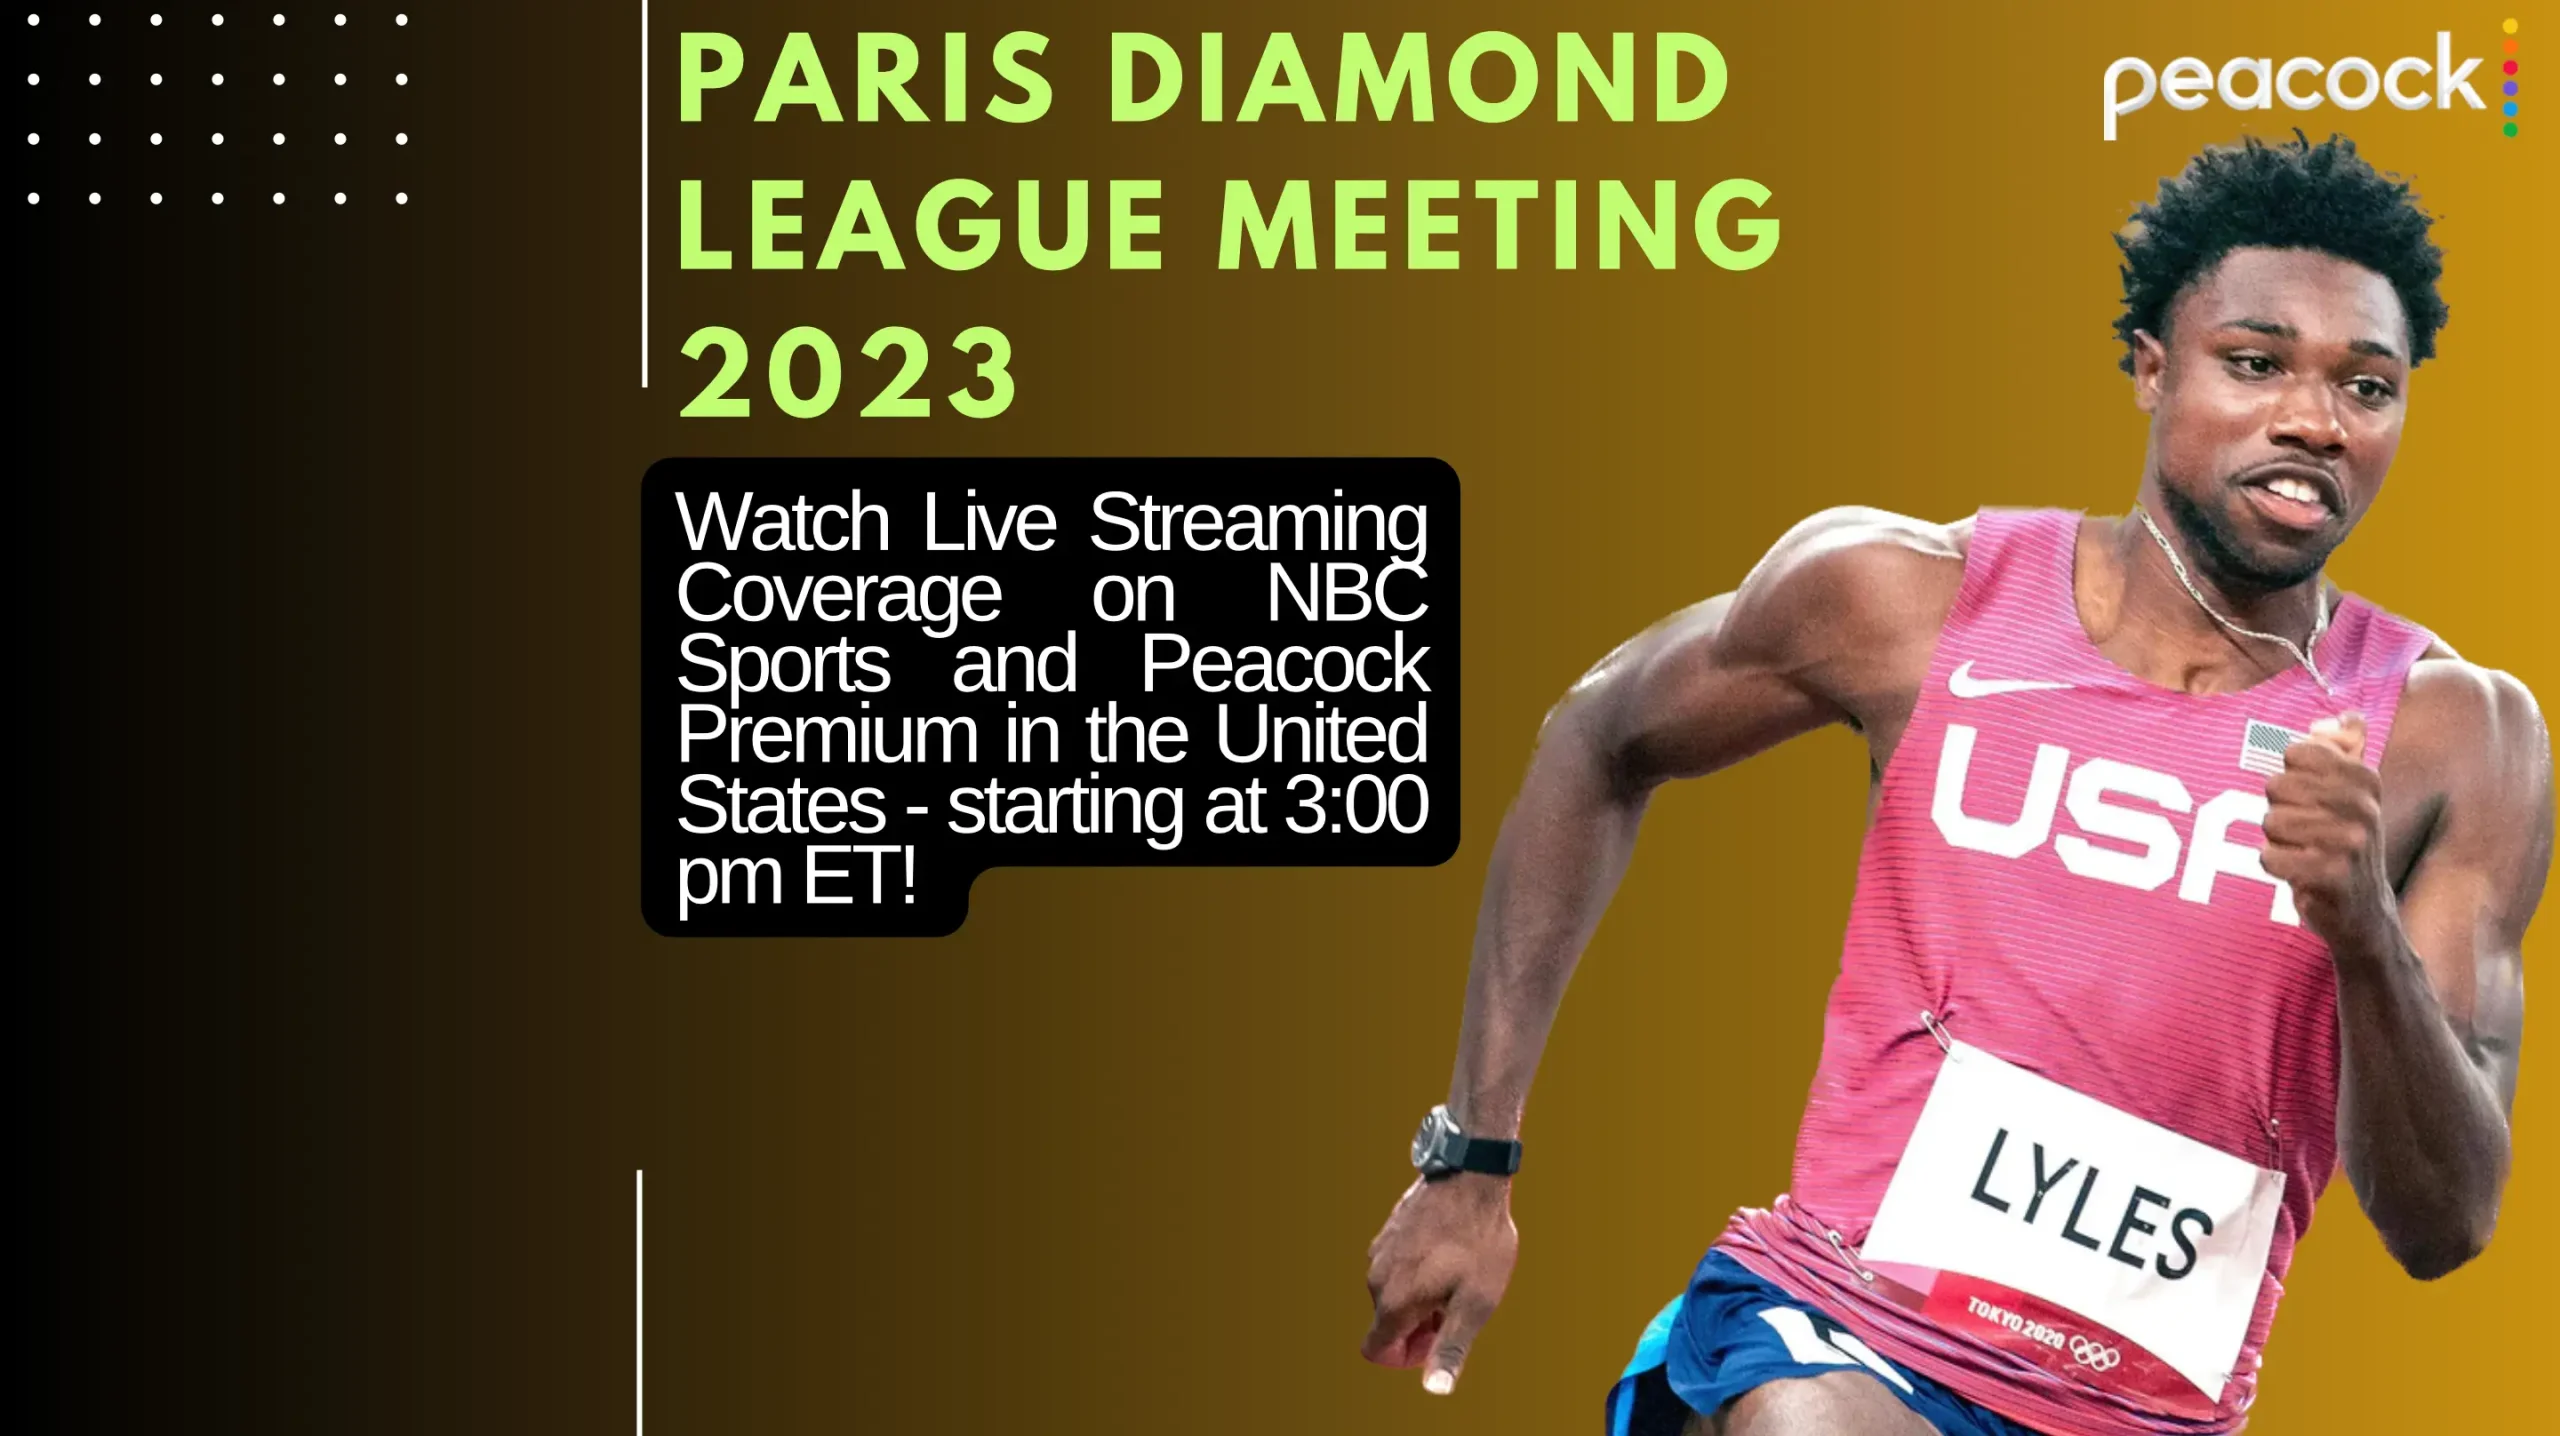 Watch the 2023 Paris Diamond League meeting live streaming